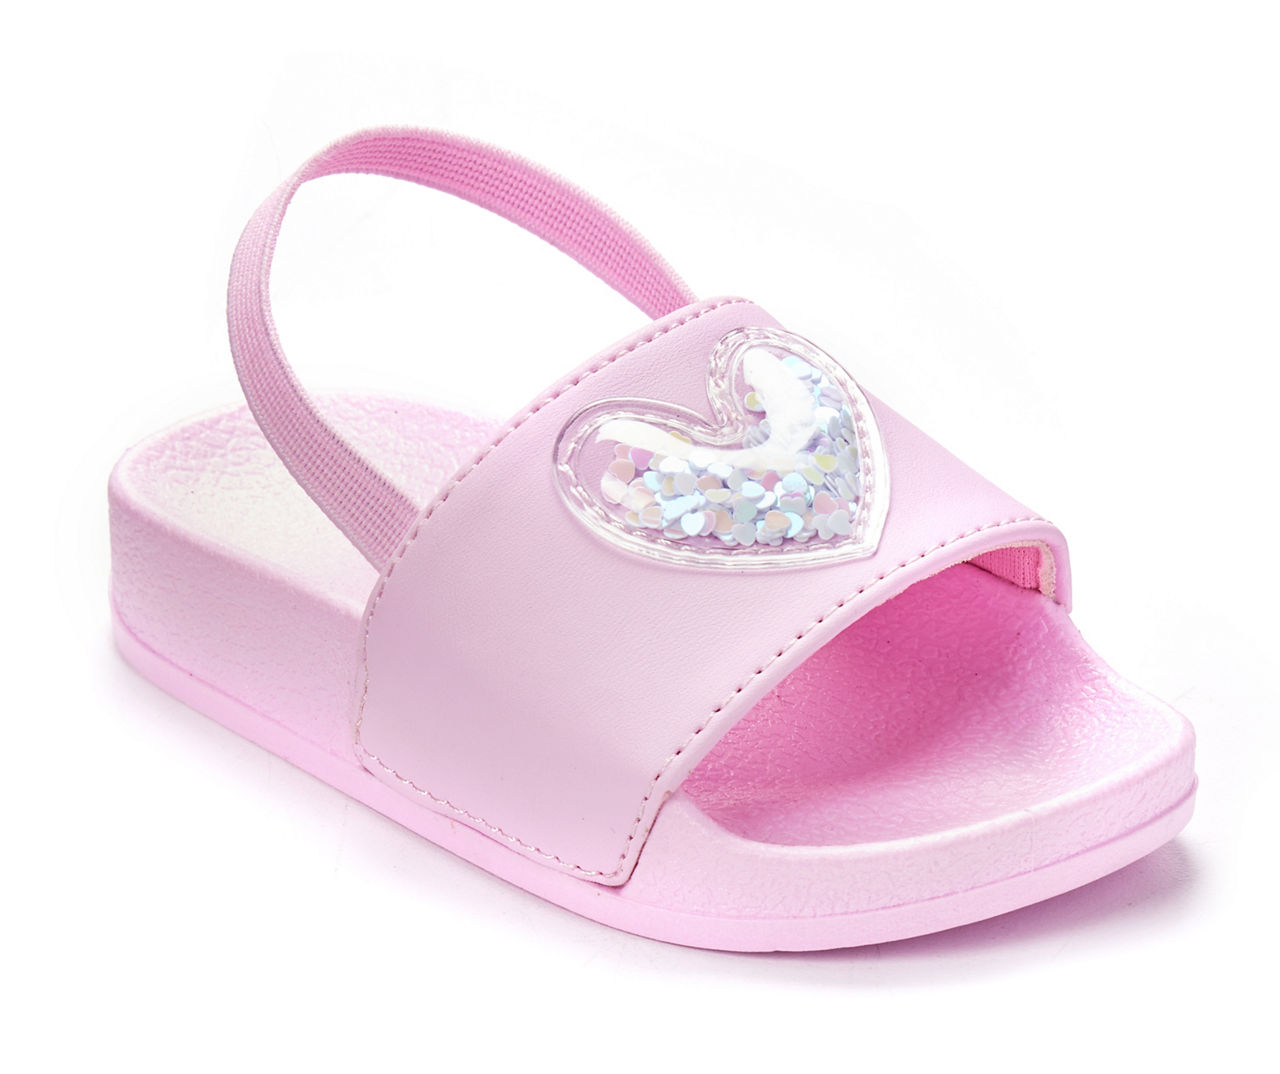 Toddler Size 9/10 Pink Glitter Heart Slide